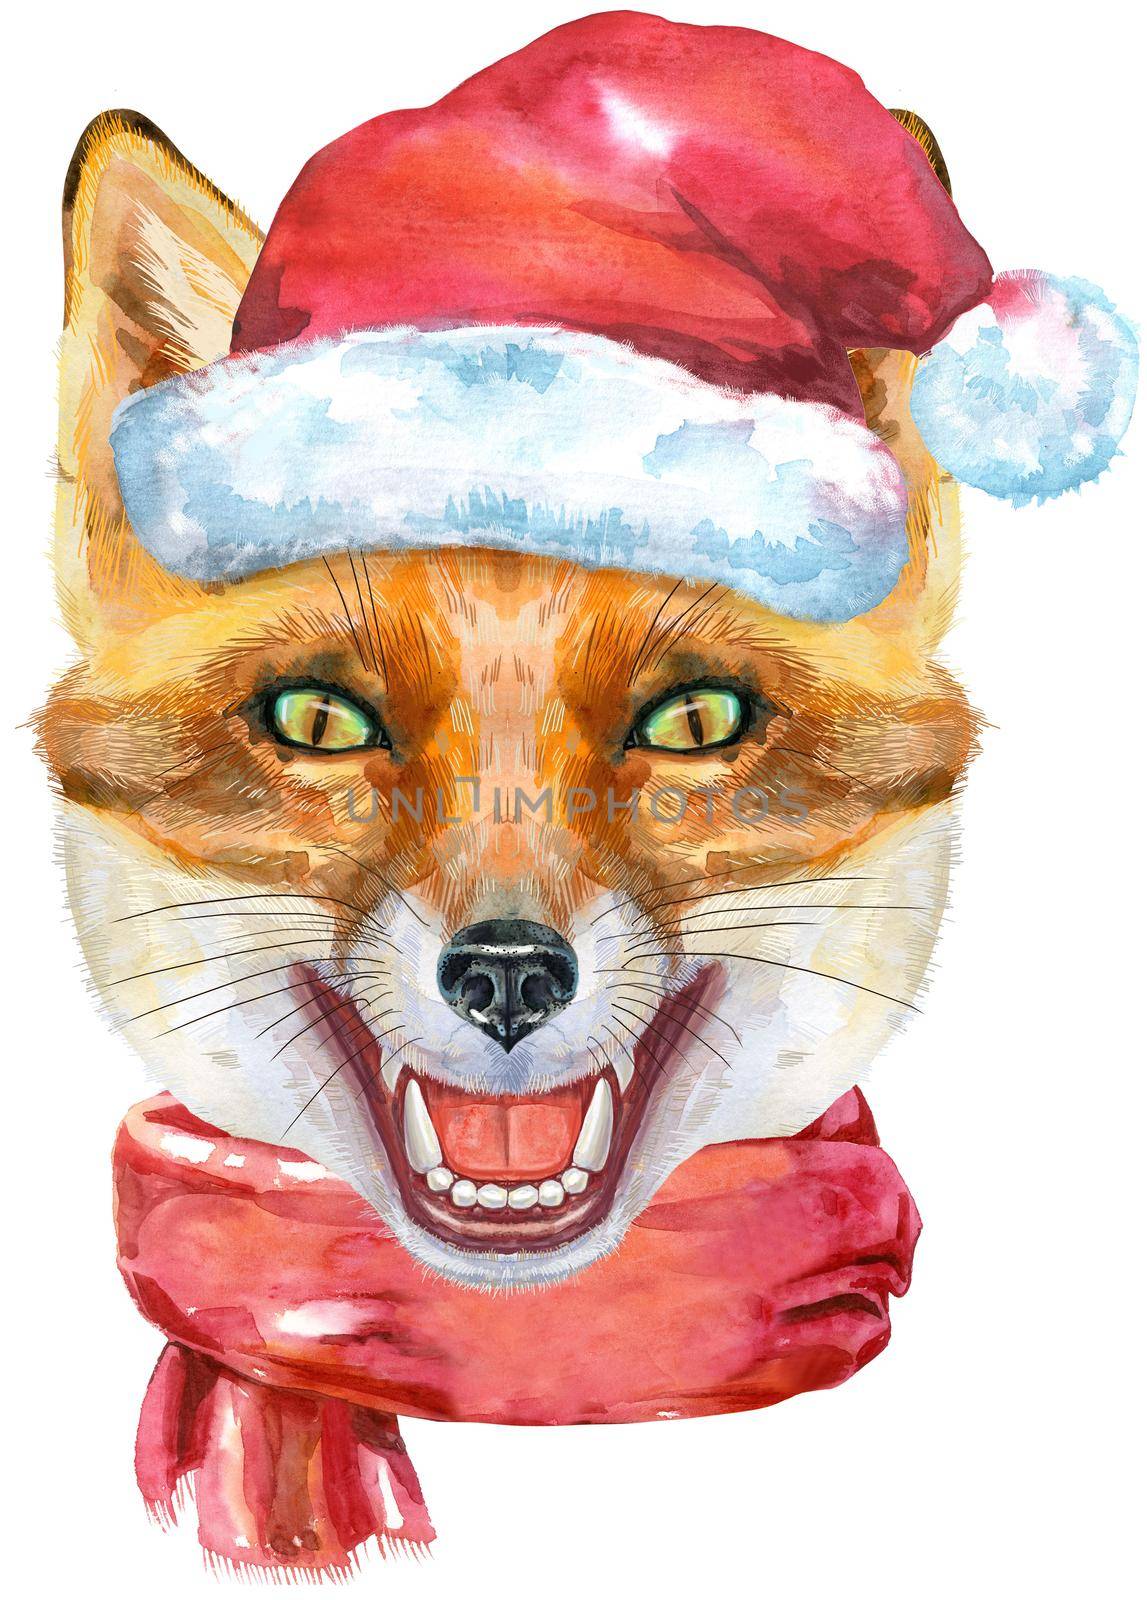 Fox portrait in Santa hat and red scarf. Watercolor orange fox painting illustration. Beautiful wildlife world